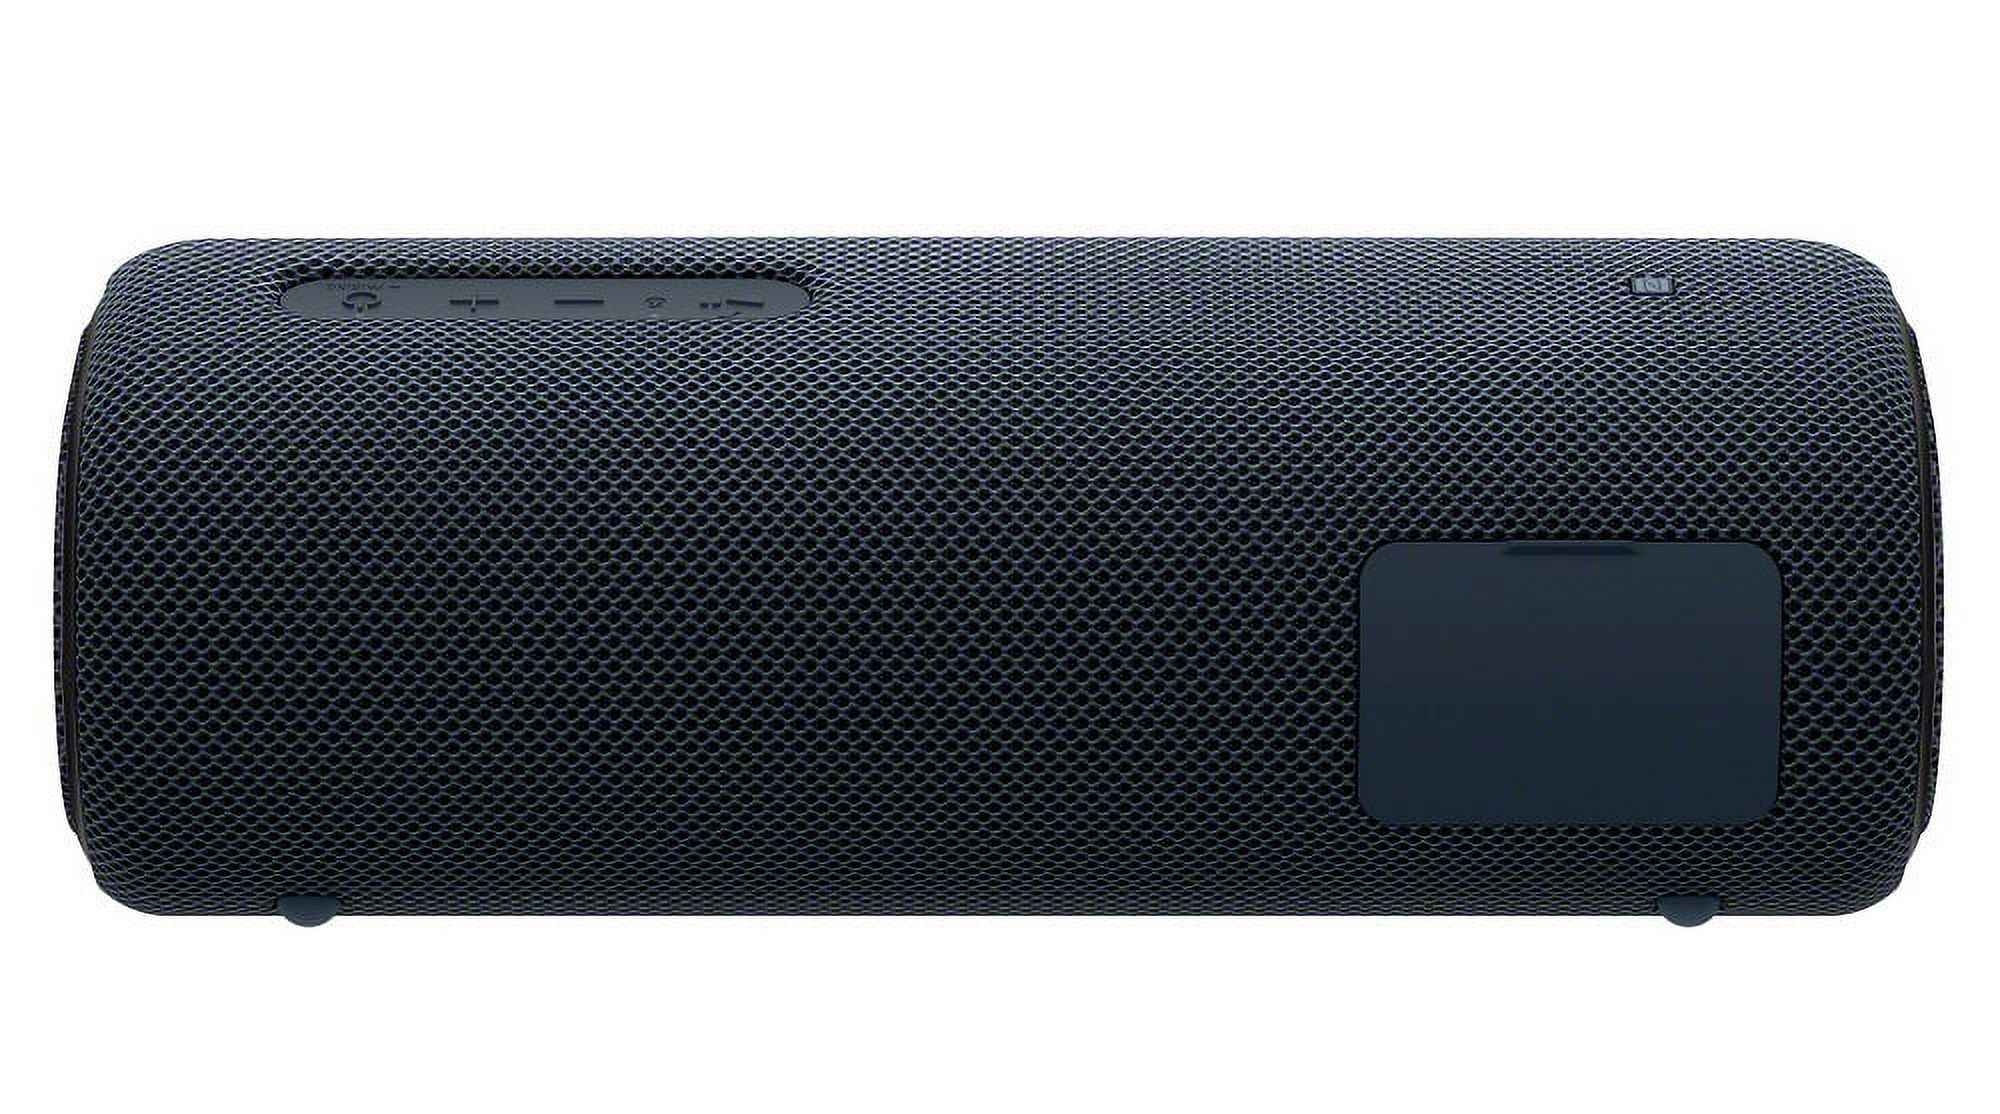 SONY SRS-XB31/B Black Portable Wireless Speaker - image 4 of 7